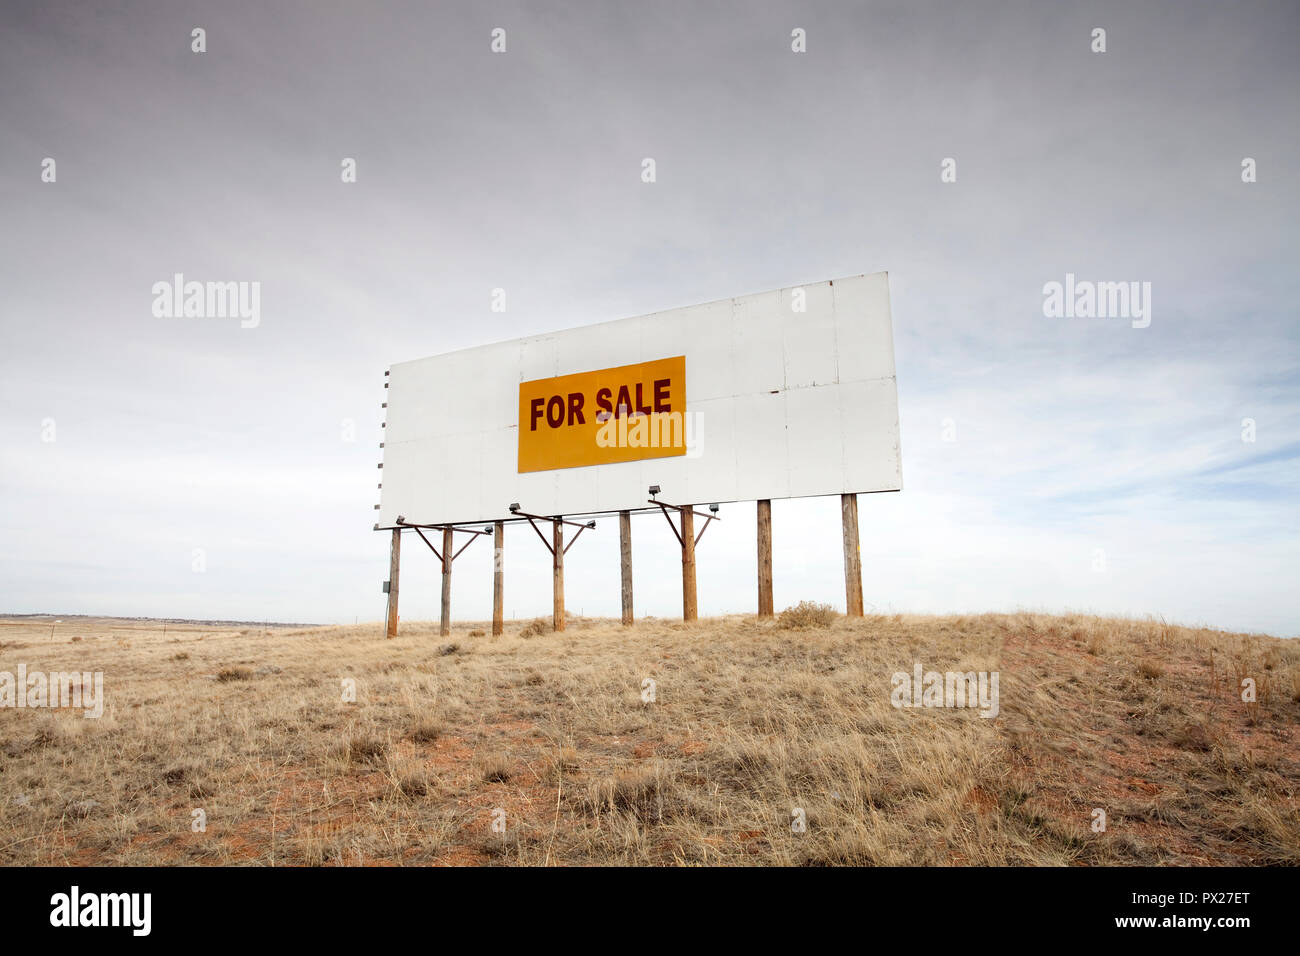 Roadside billboard sign in Wyoming, USA Stock Photo